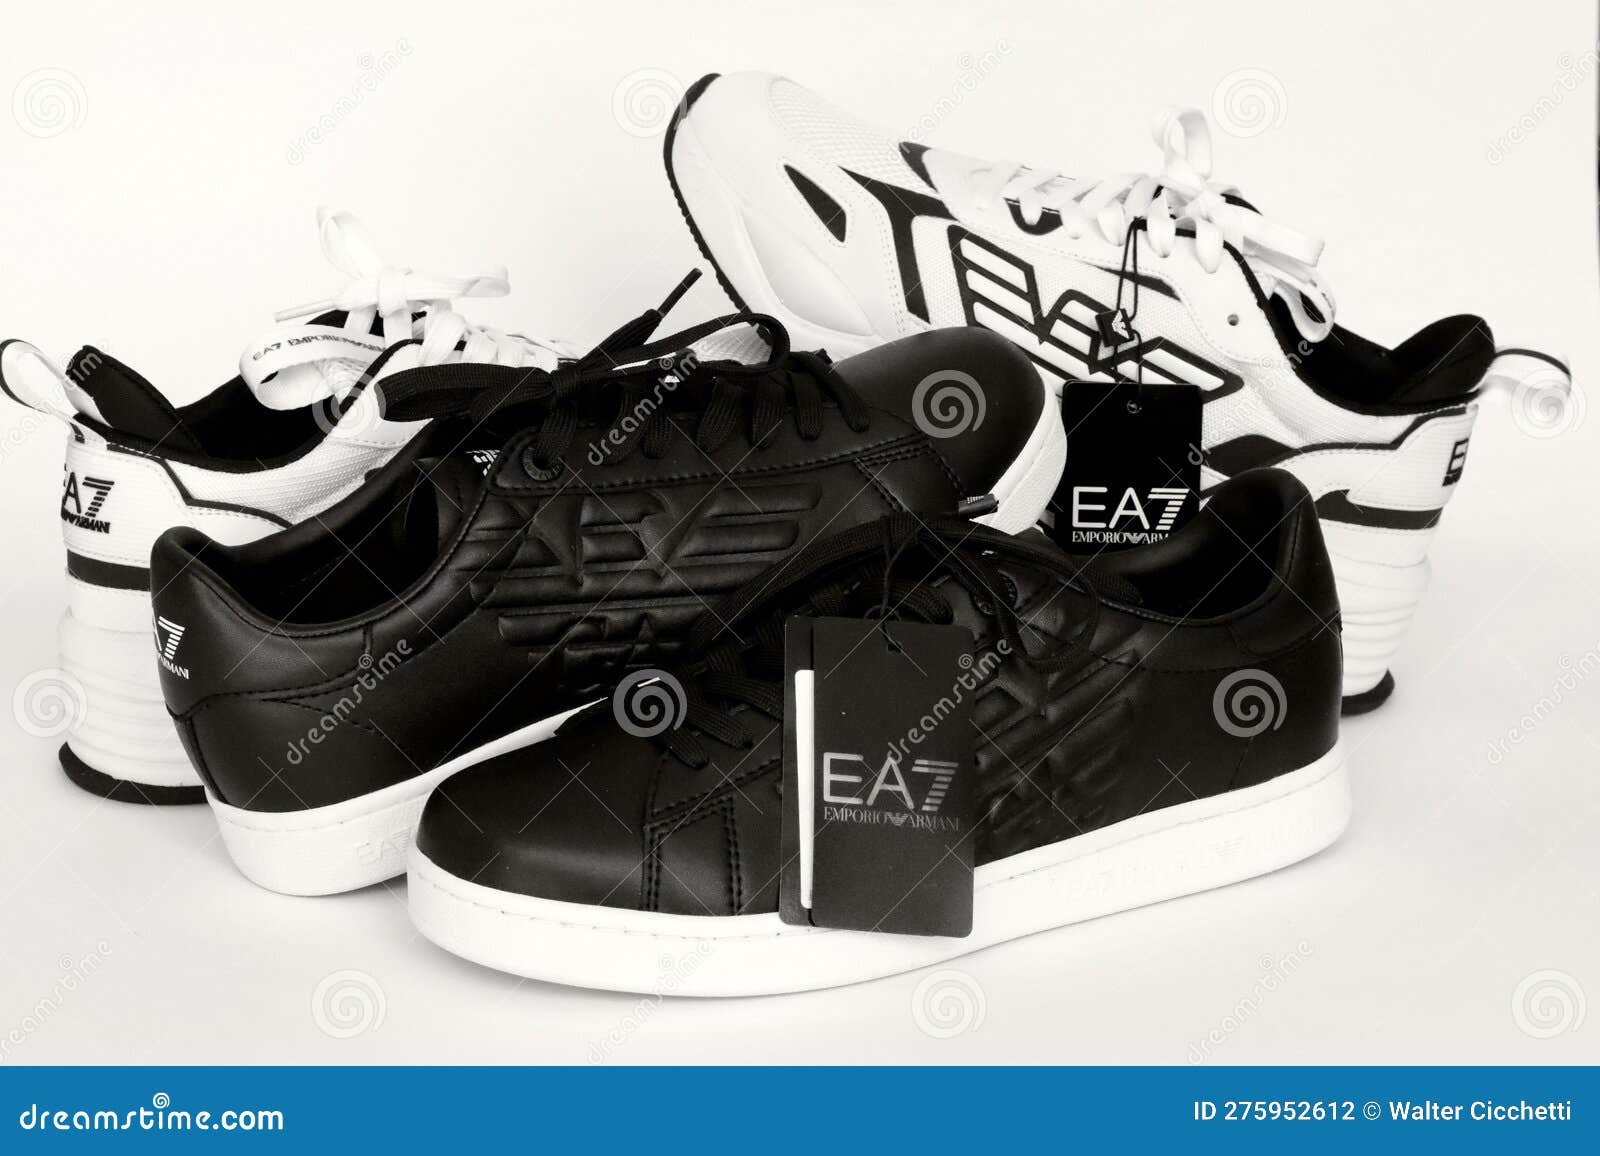 Ea7 Emporio Armani Crusher Distance Panelled Sneakers - Farfetch